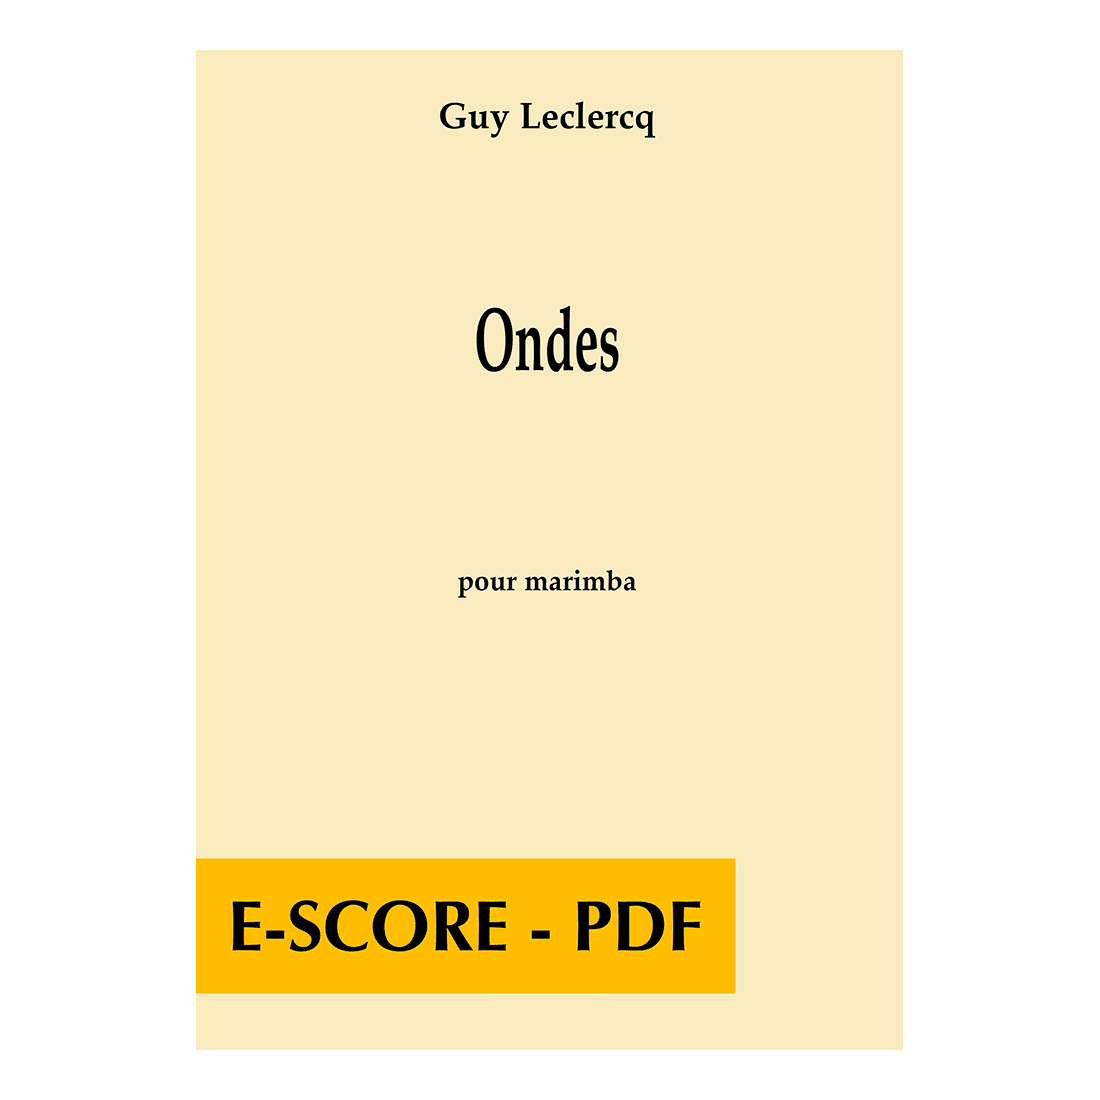 Ondes for marimba - E-score PDF